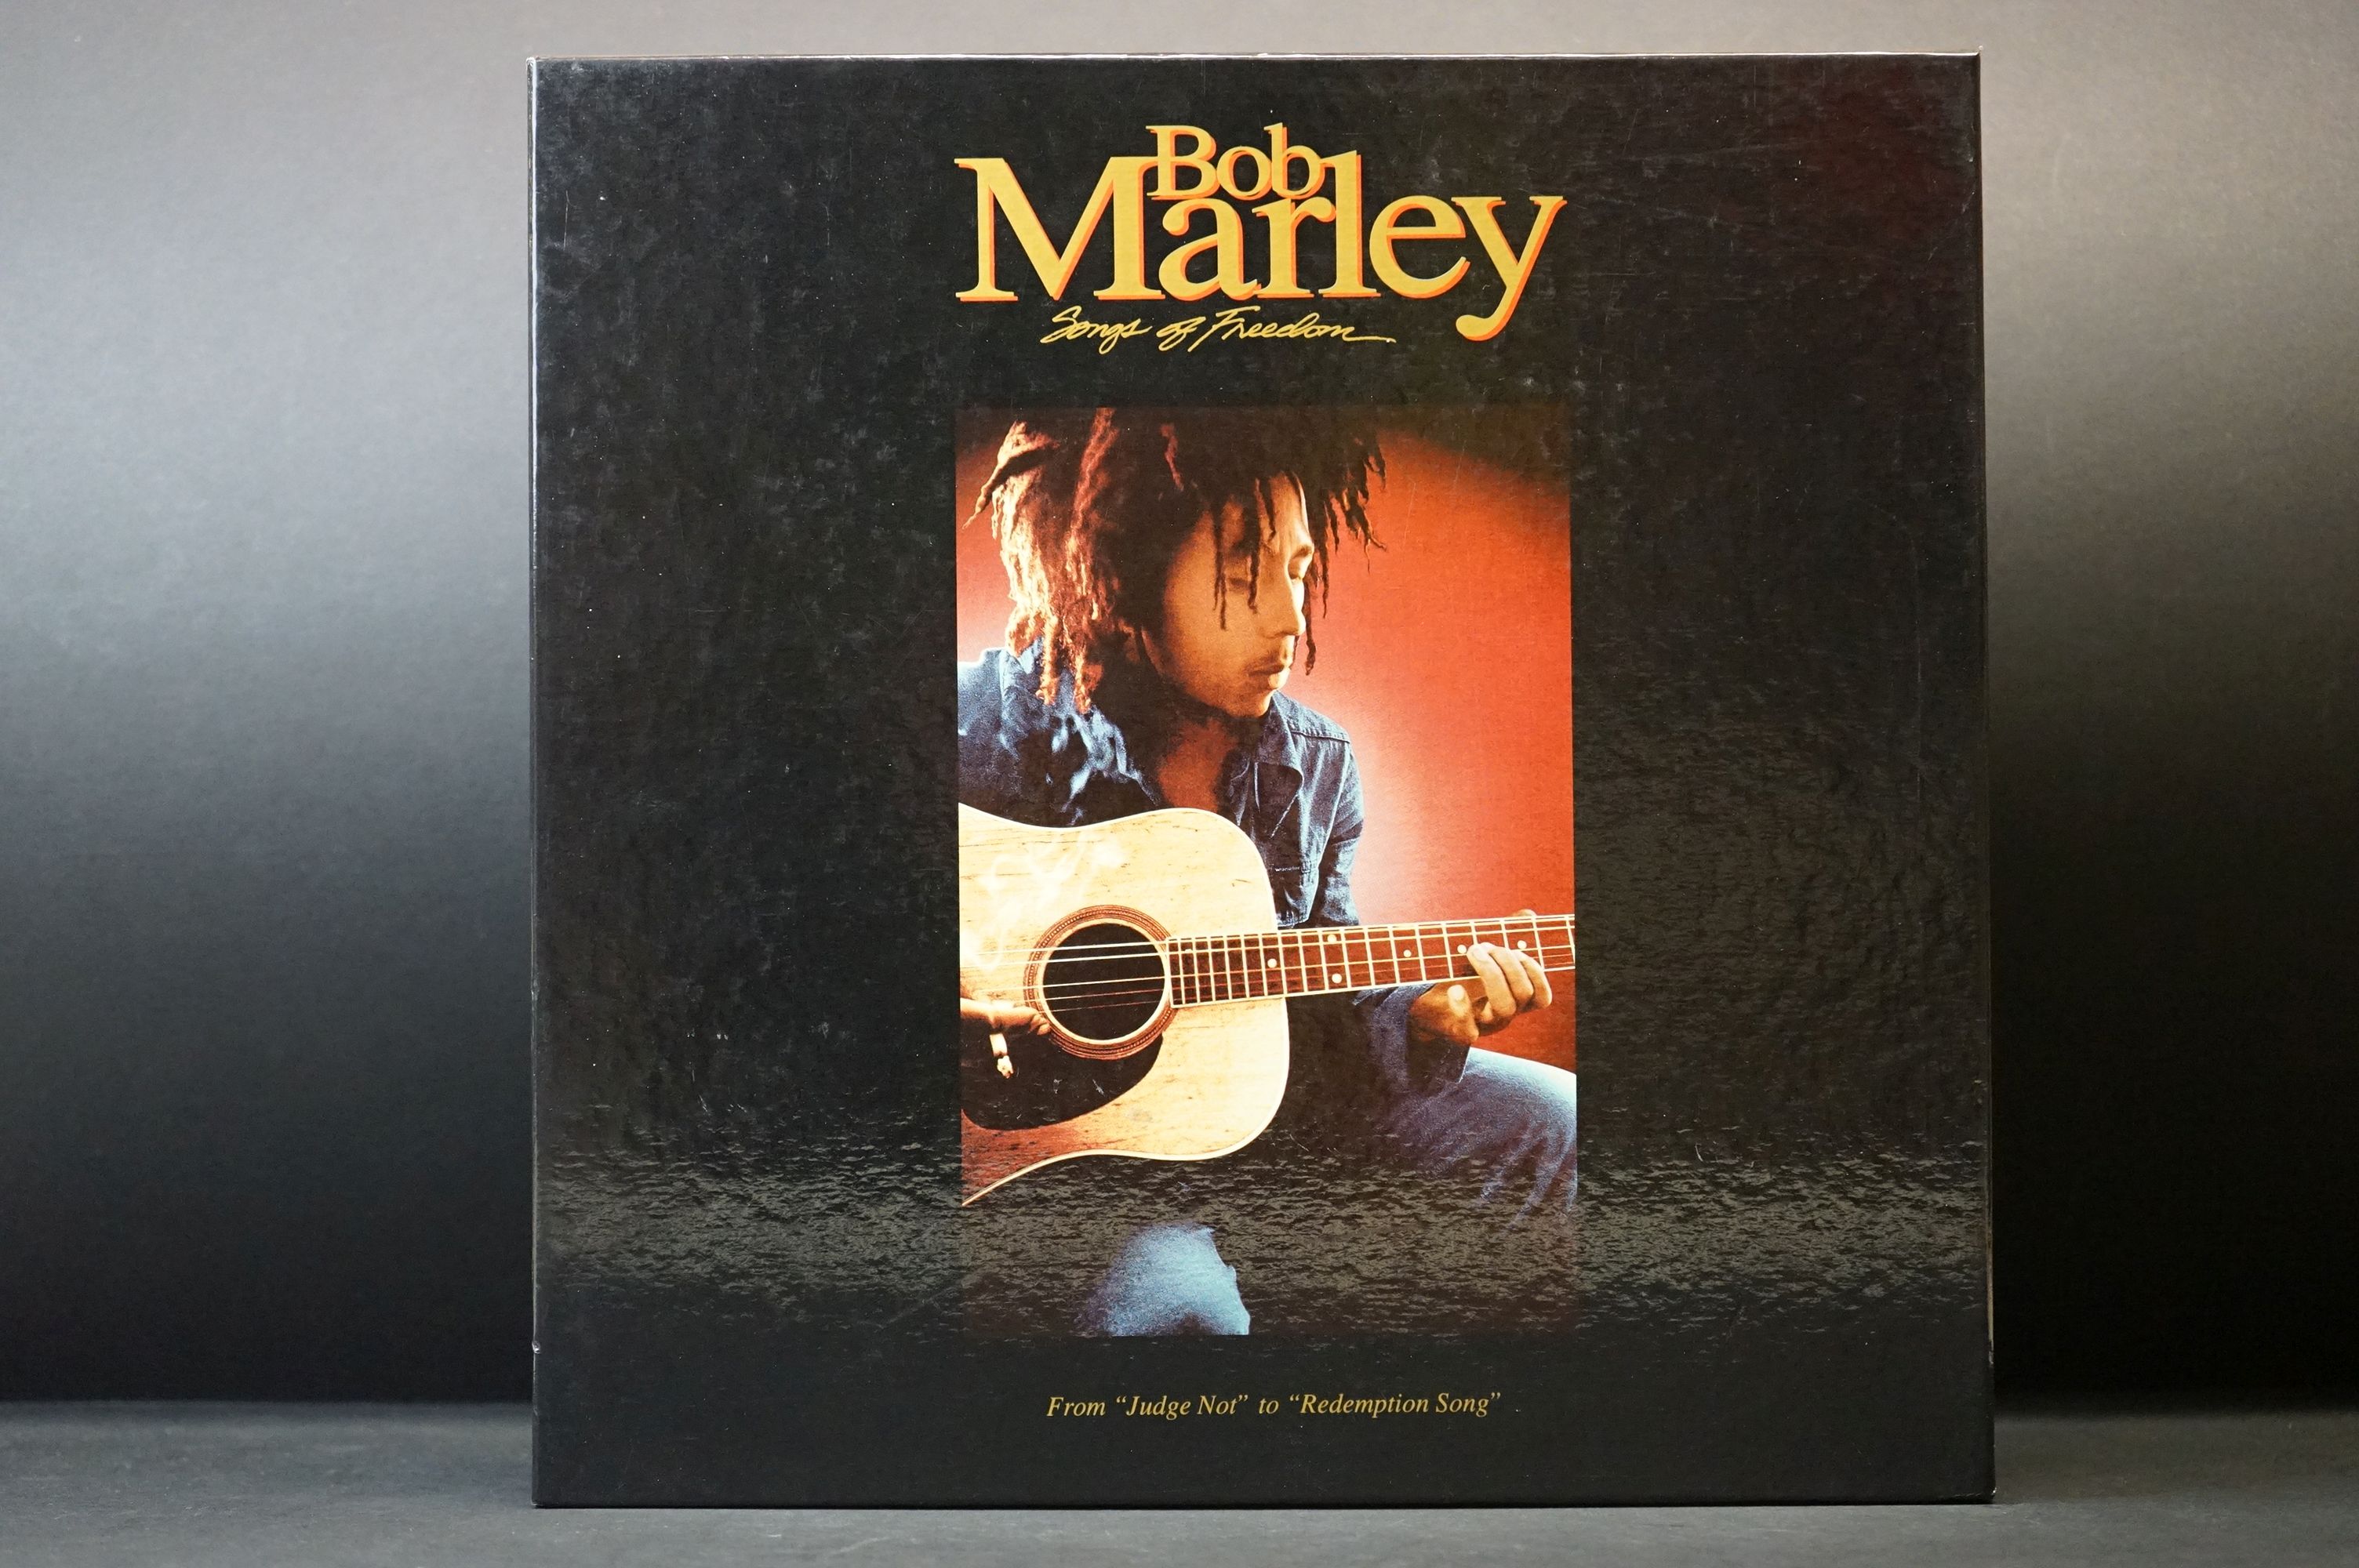 Vinyl - Bob Marley Songs of Freedom Box Set TGLBX1 ex